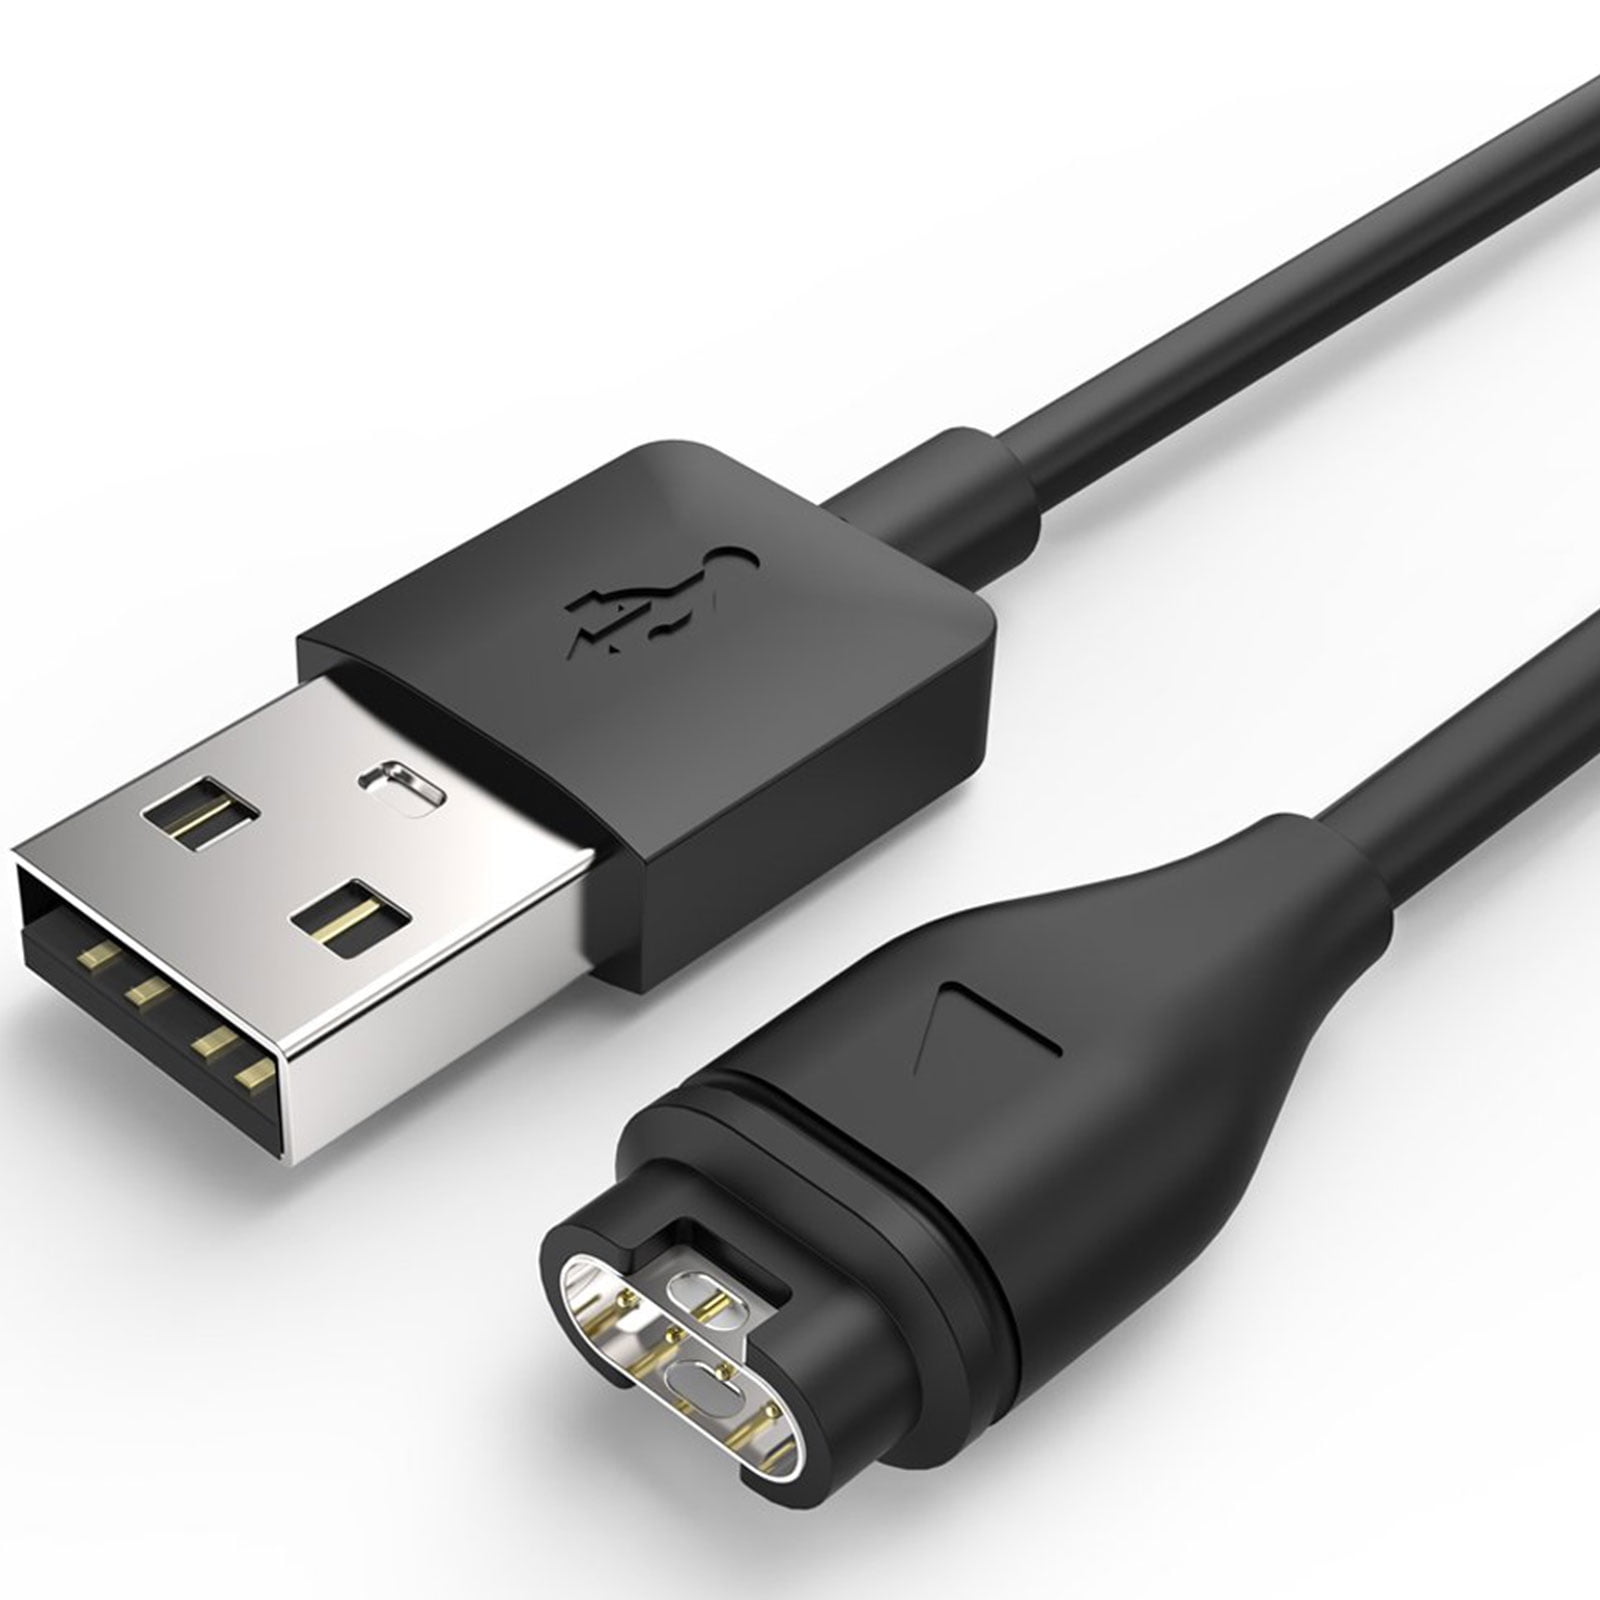 USB Charger Charging Cable Cord For Garmin Fenix 5/5S/5X New Vivosport 3 I3I3 